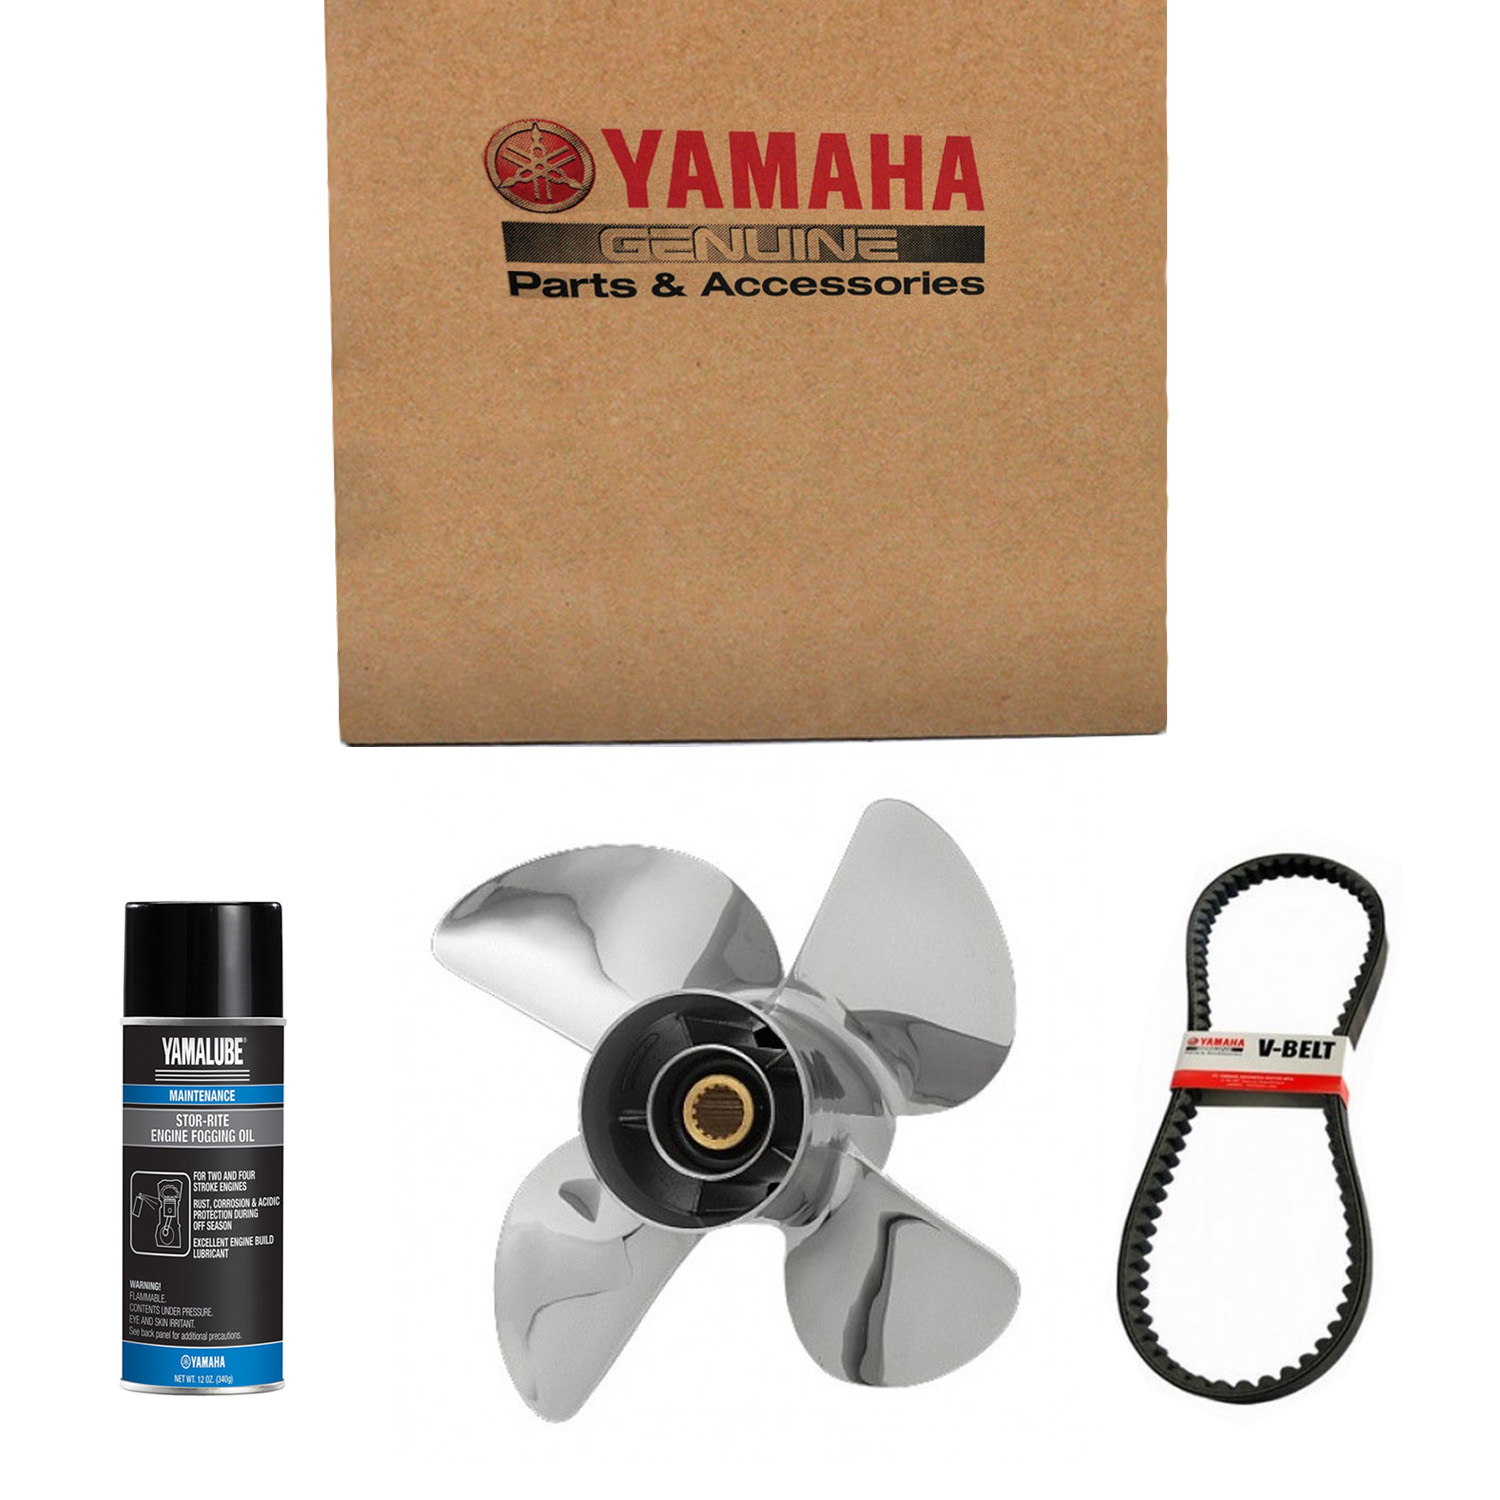 Yamaha New OEM Fuel Feed Kit, 69J-244B0-08-00